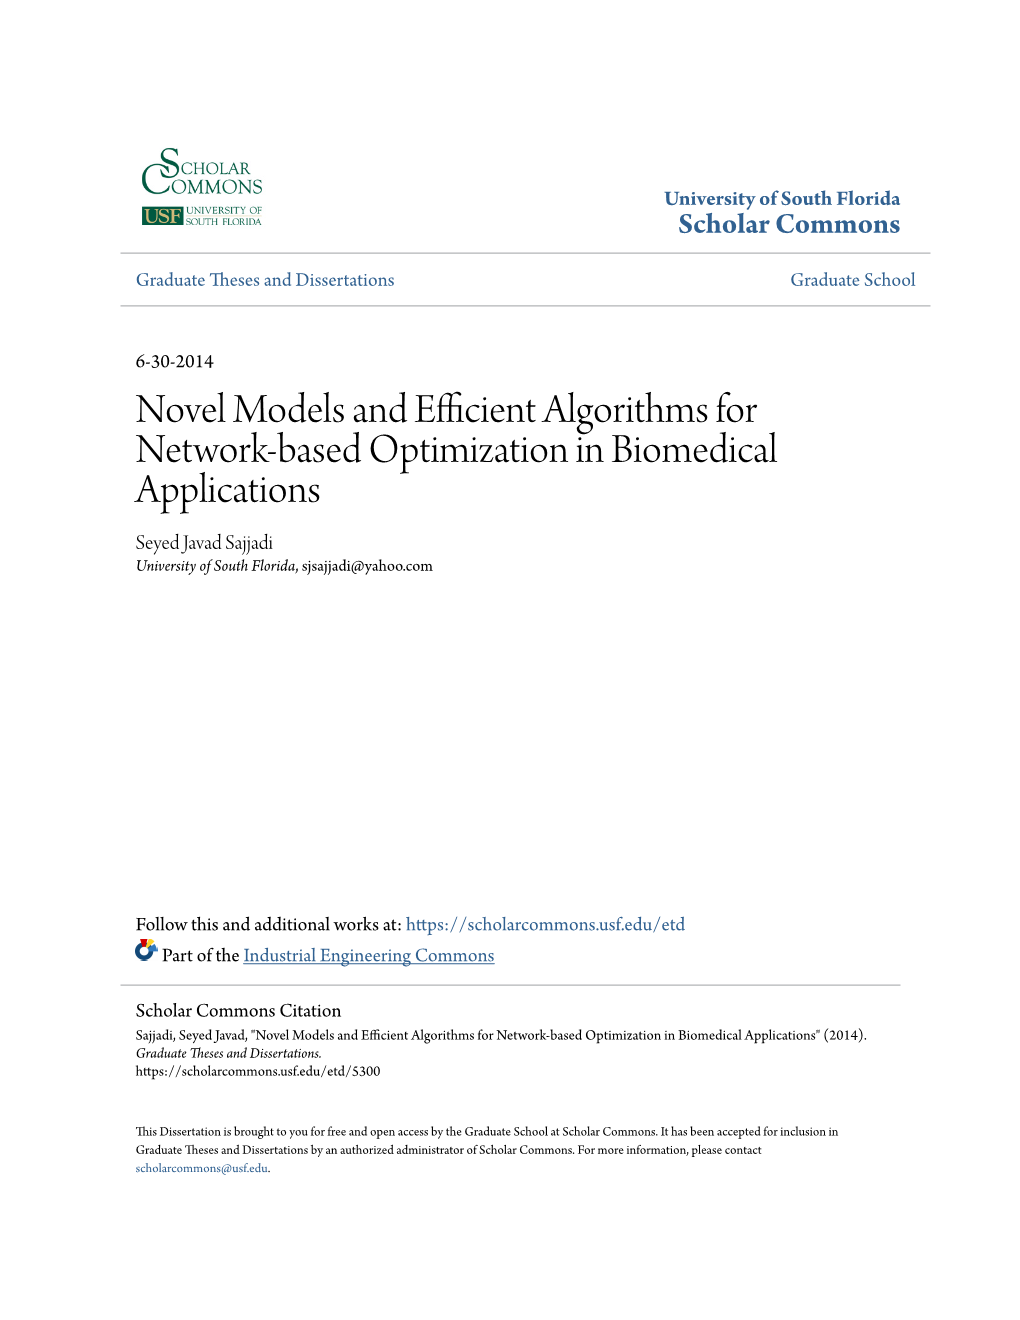 Novel Models and Efficient Algorithms for Network-Based Optimization in Biomedical Applications Seyed Javad Sajjadi University of South Florida, Sjsajjadi@Yahoo.Com